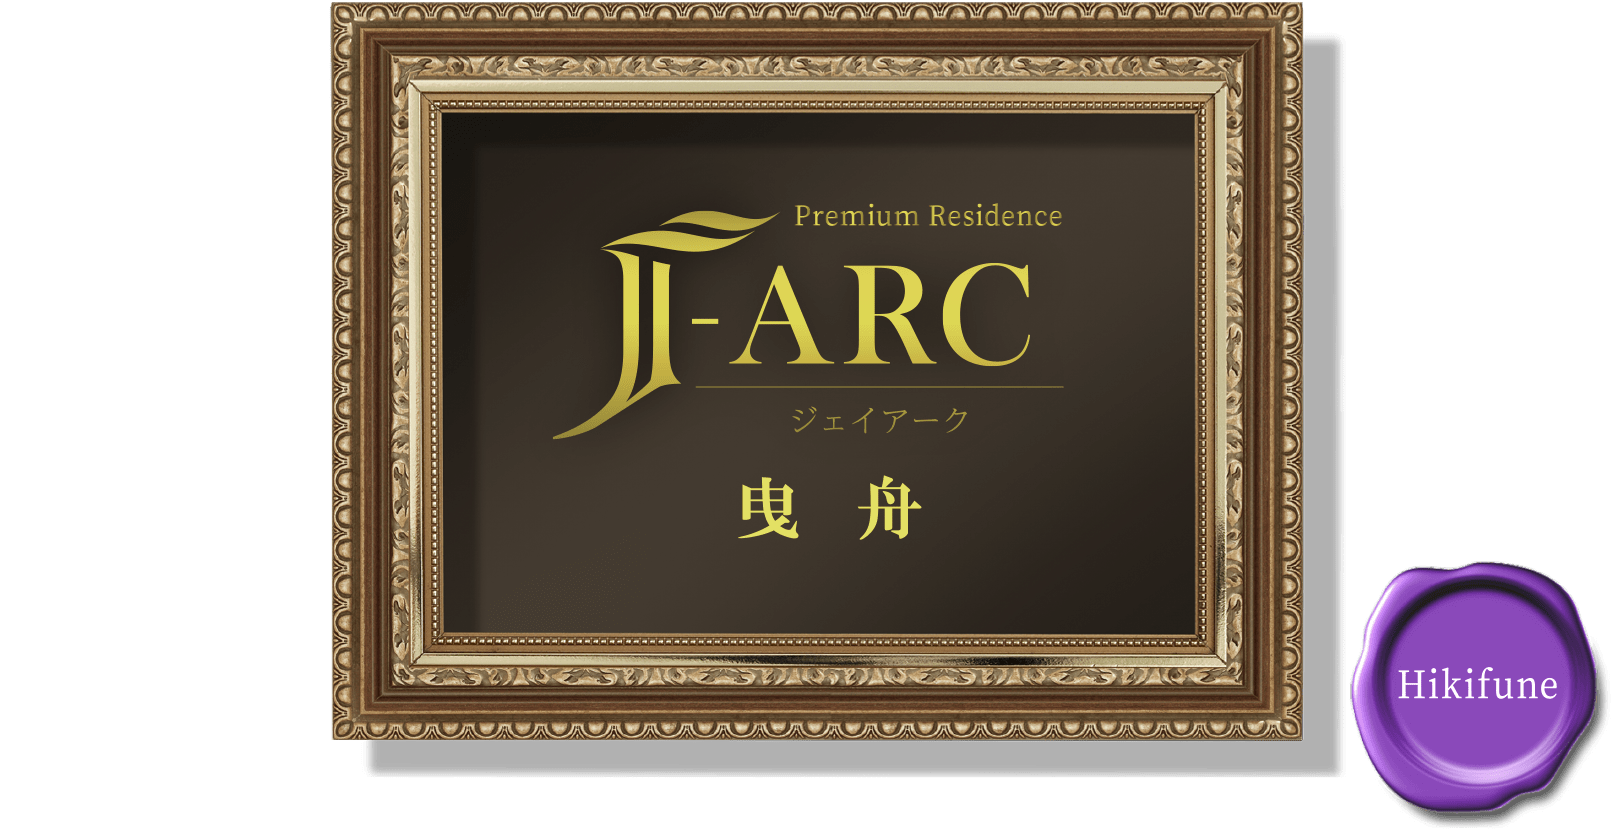 Premium Residence J-ARC 曳舟